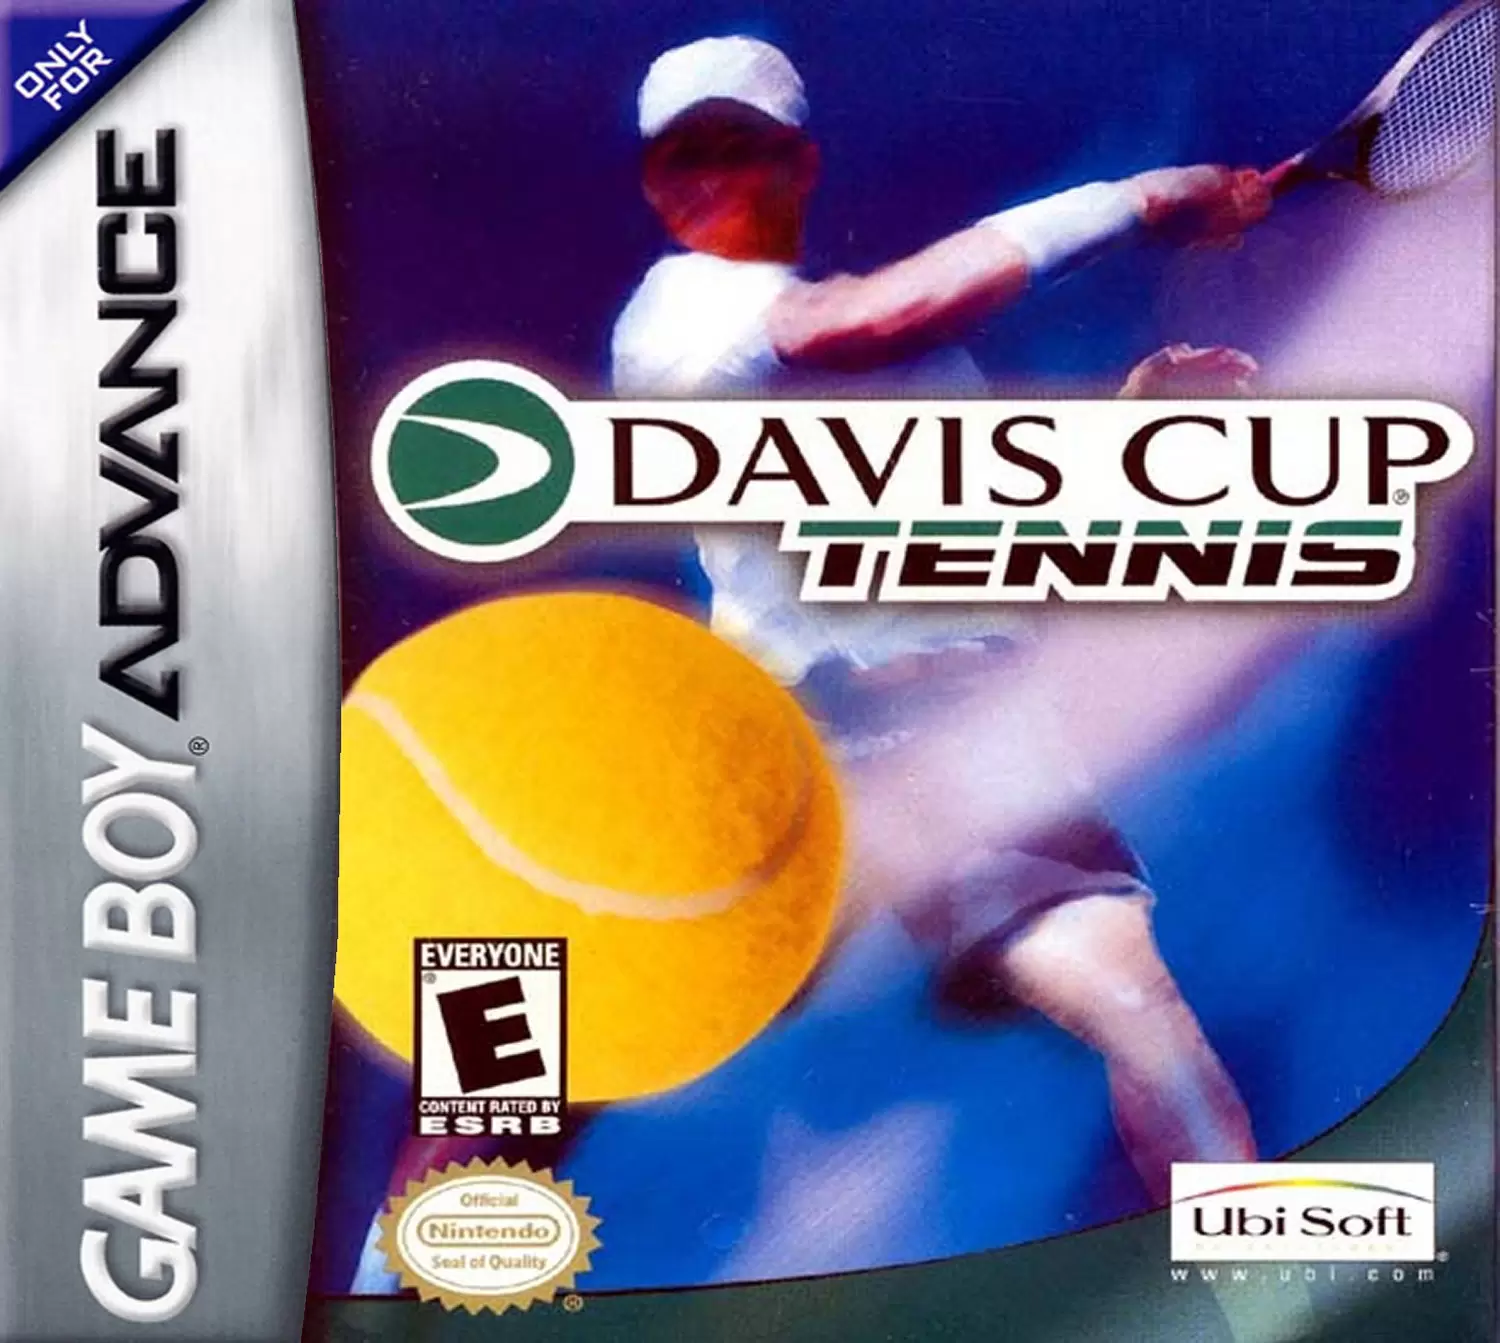 Game Boy Advance Games - Davis Cup Tennis